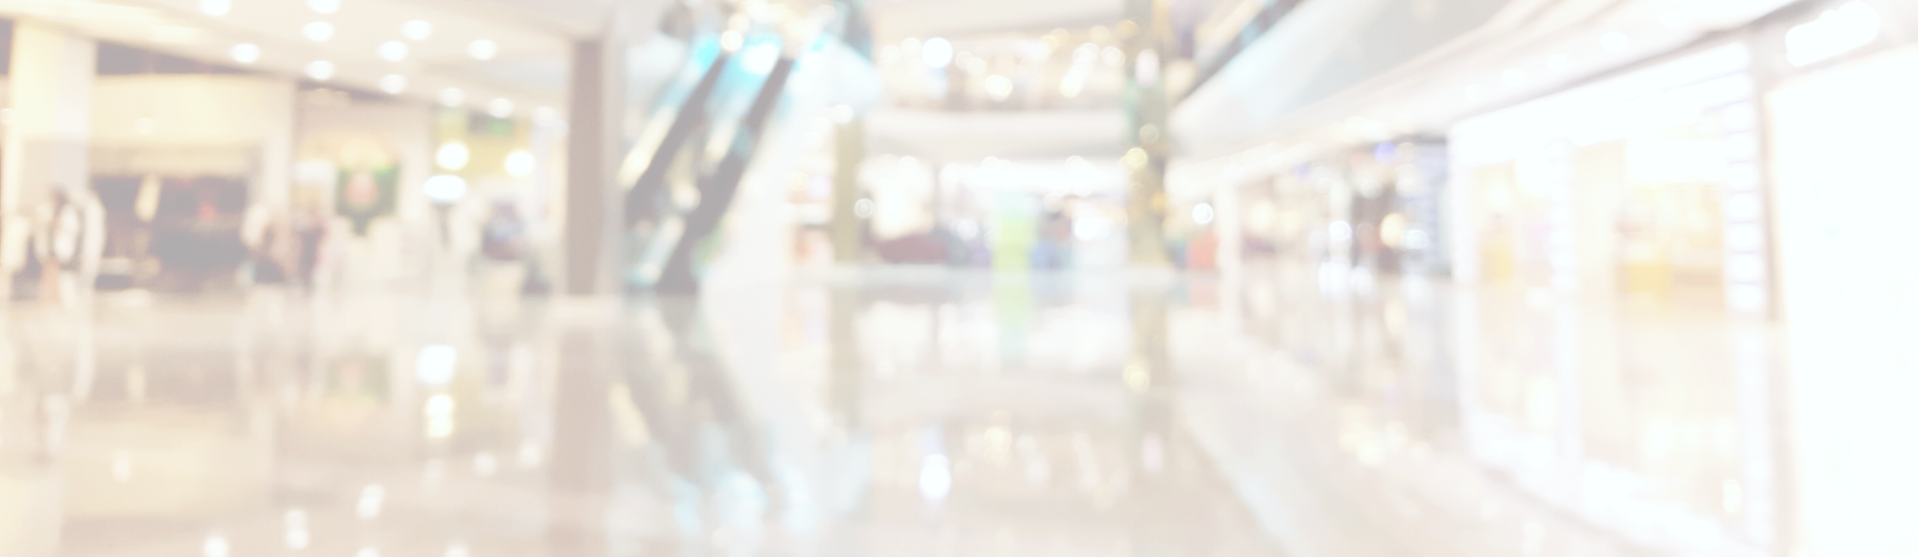 blurred mall hallway